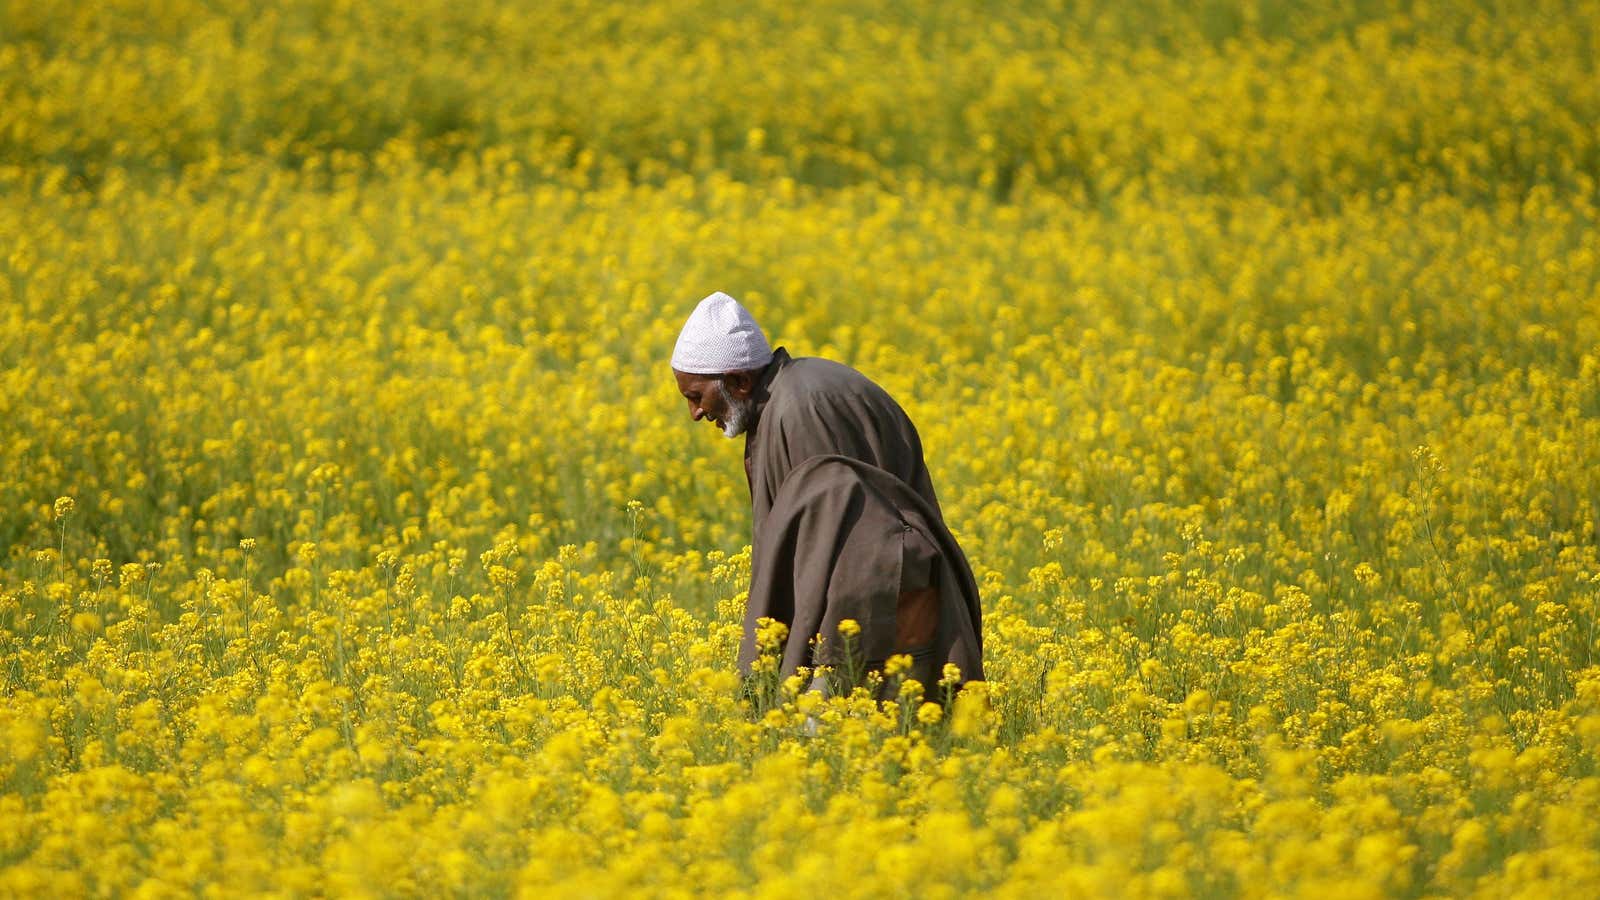 FILE PHOTO: A Kashmiri man walks through a mustard field on the outskirts of Srinagar April 11, 2013. REUTERS/Danish Ismail/File Photo